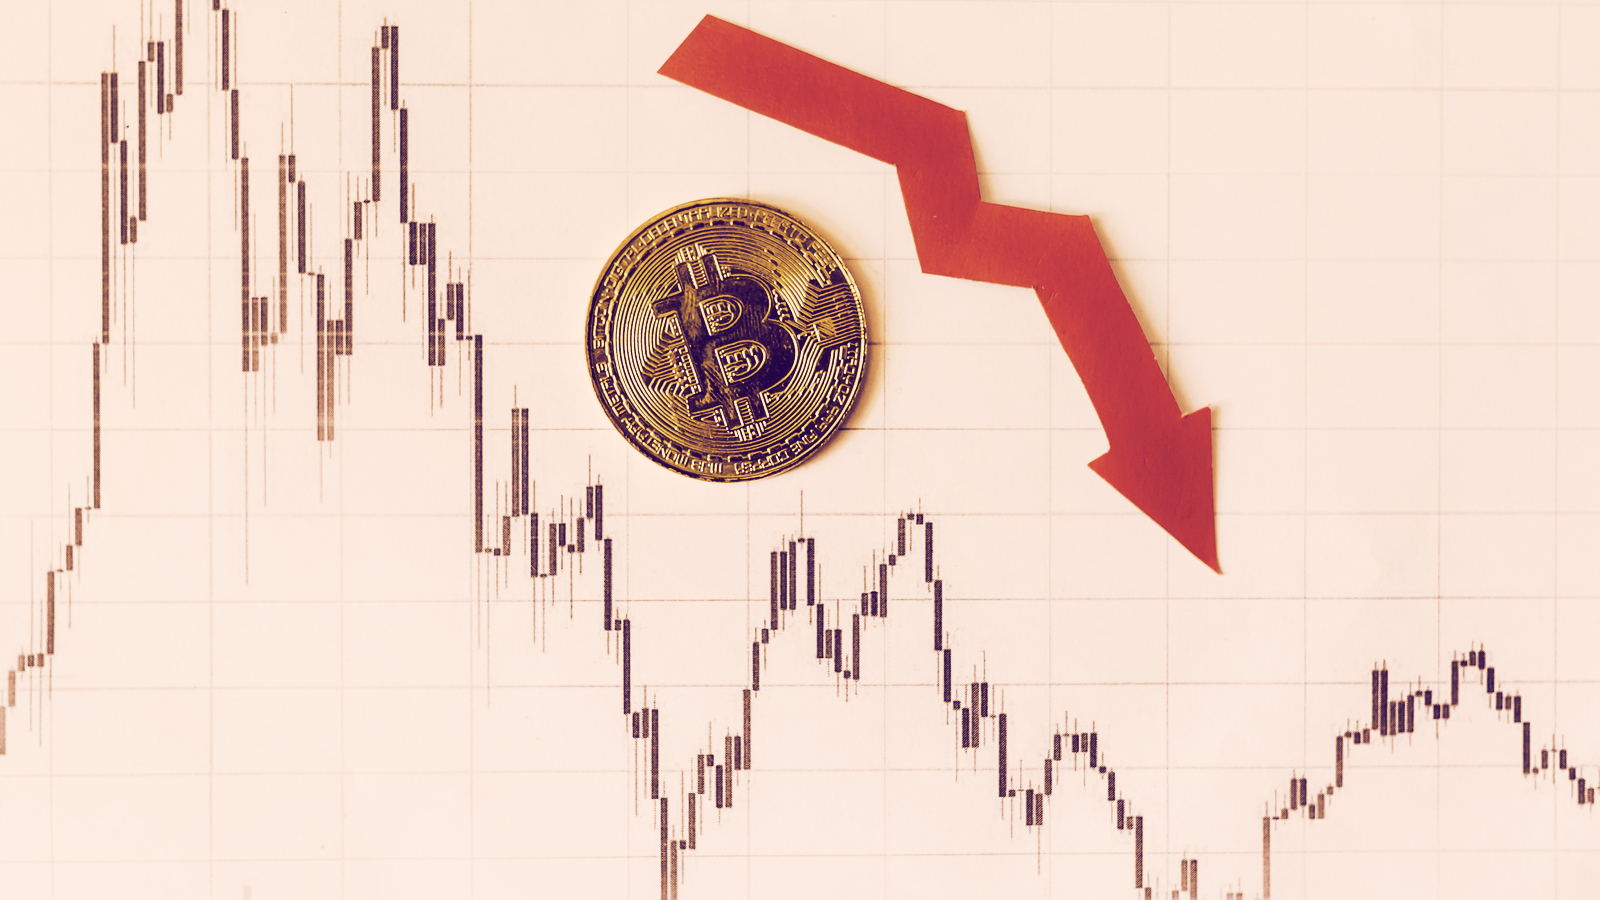 Bitcoin price falls again. Image: Shutterstock